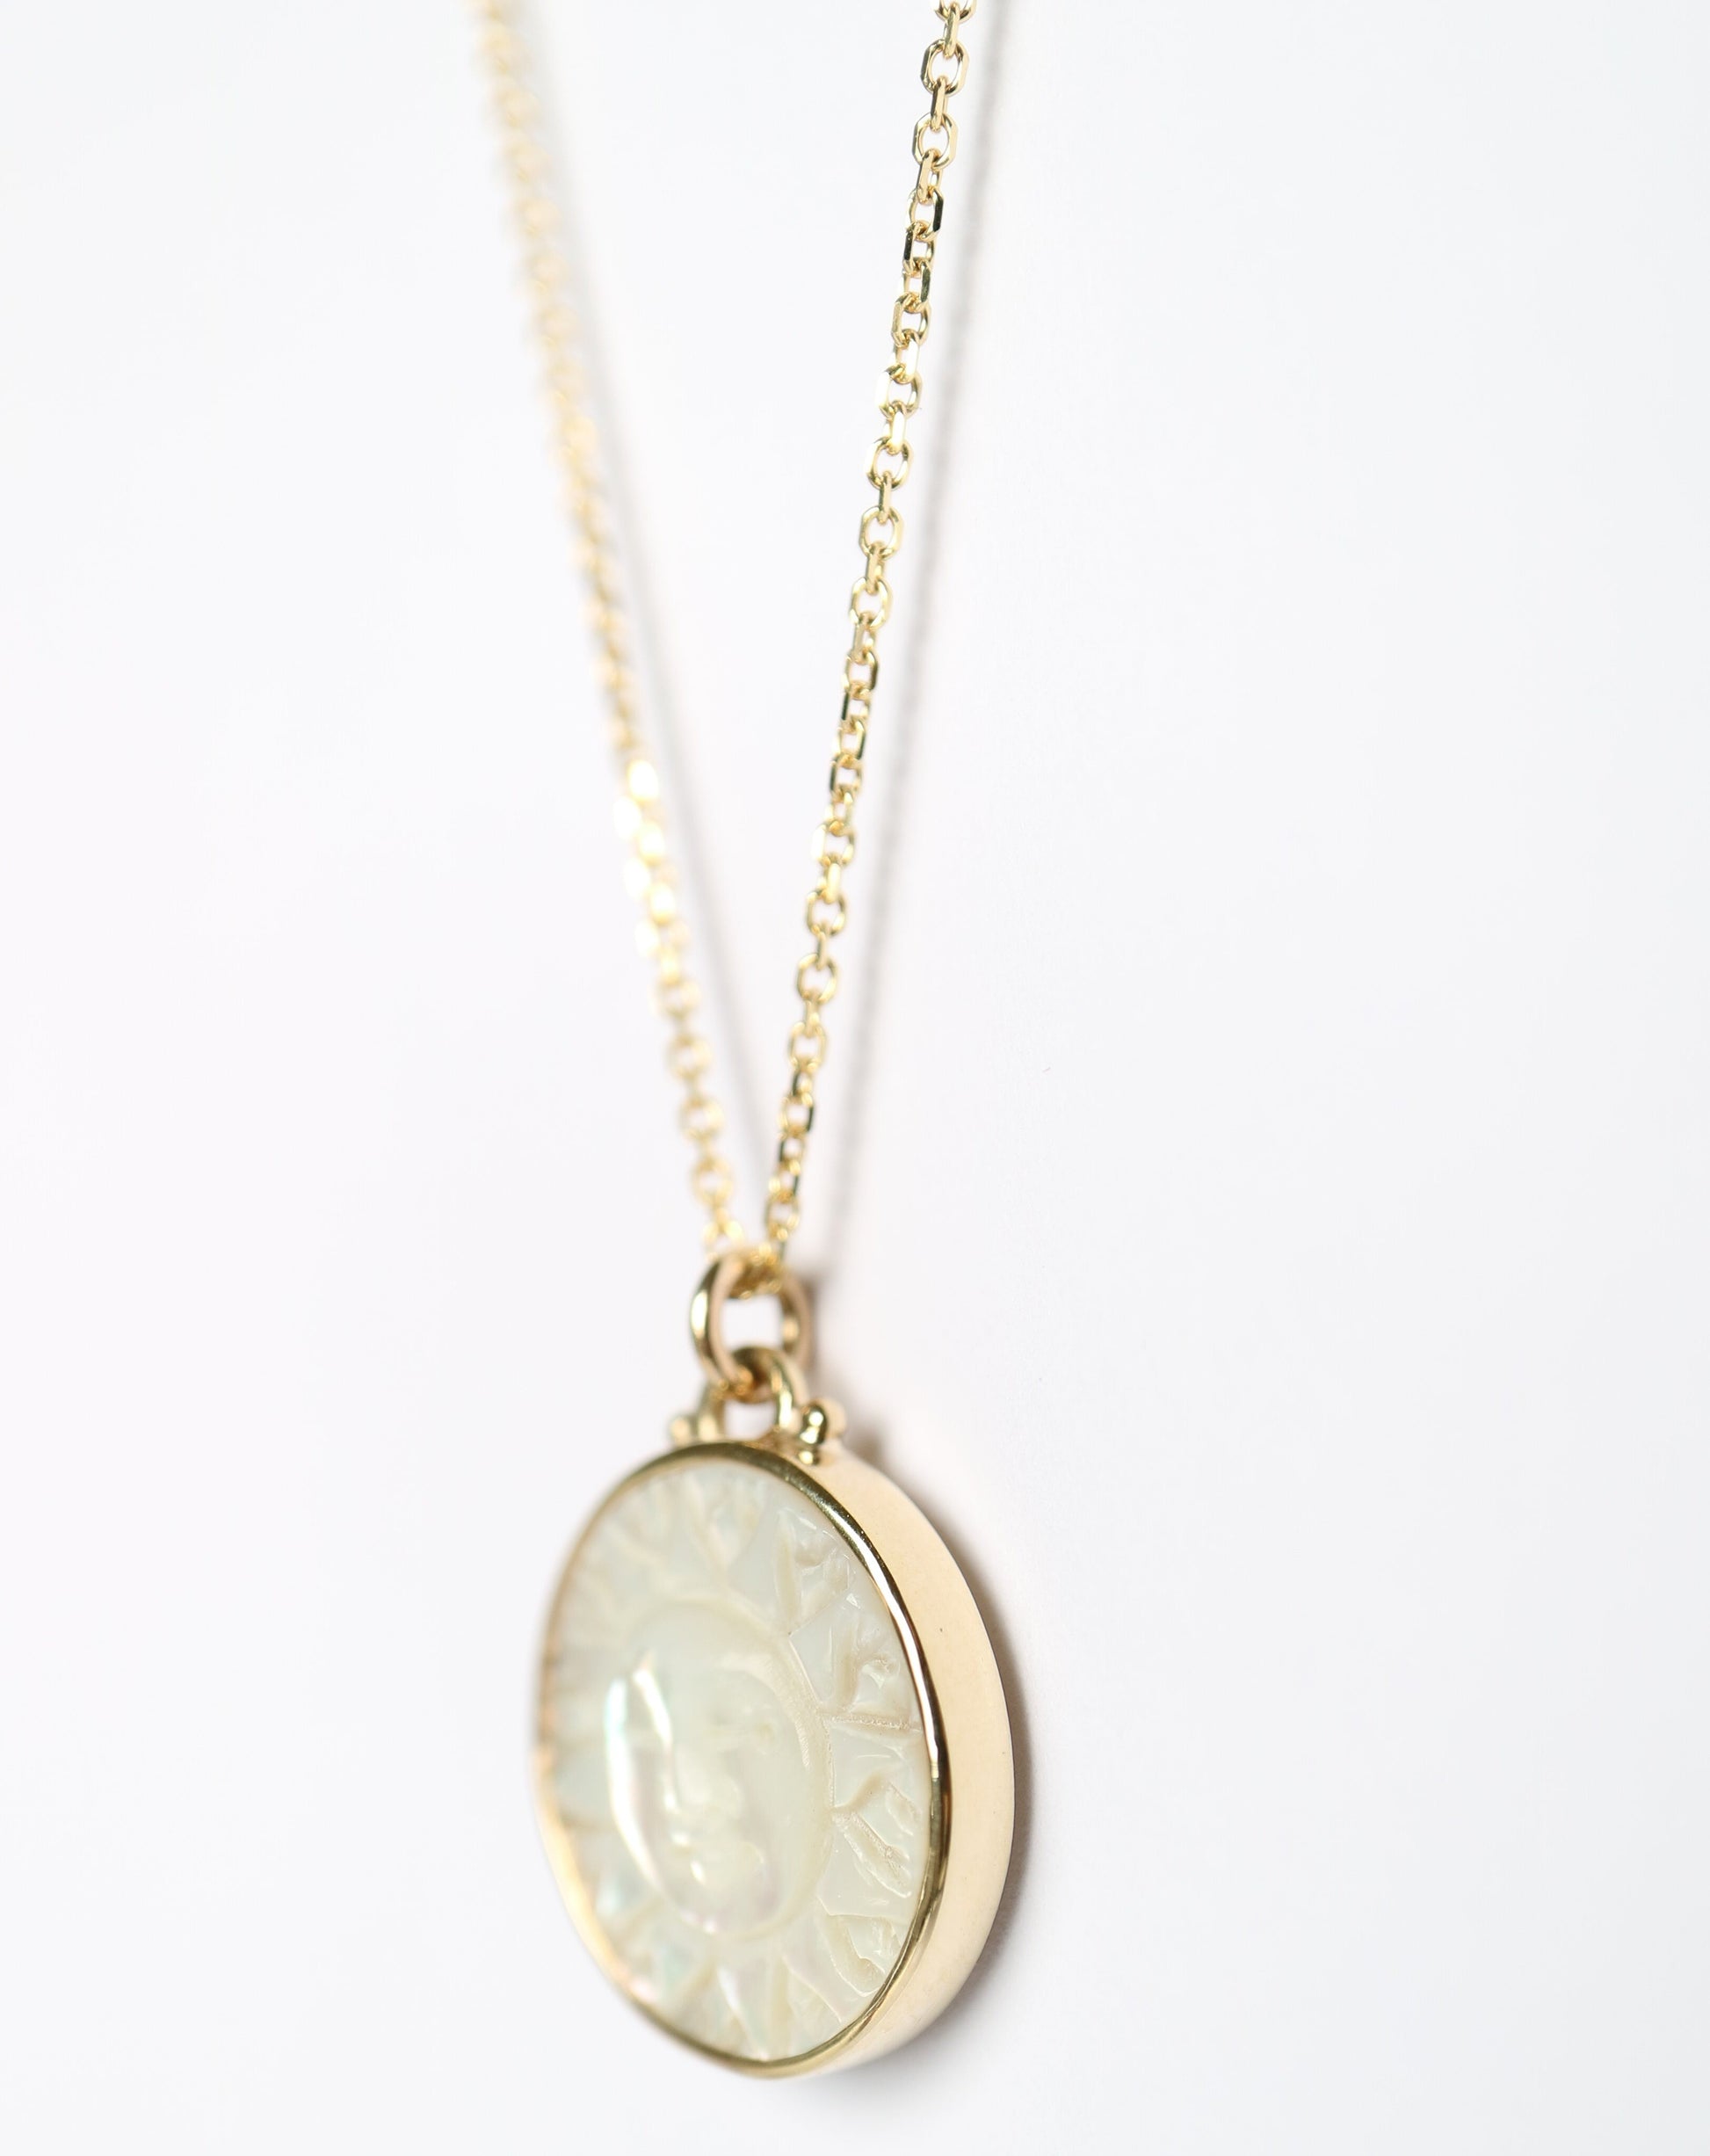 9kt gold Sunburst Pendant from Jade Rabbit Jewellery Design